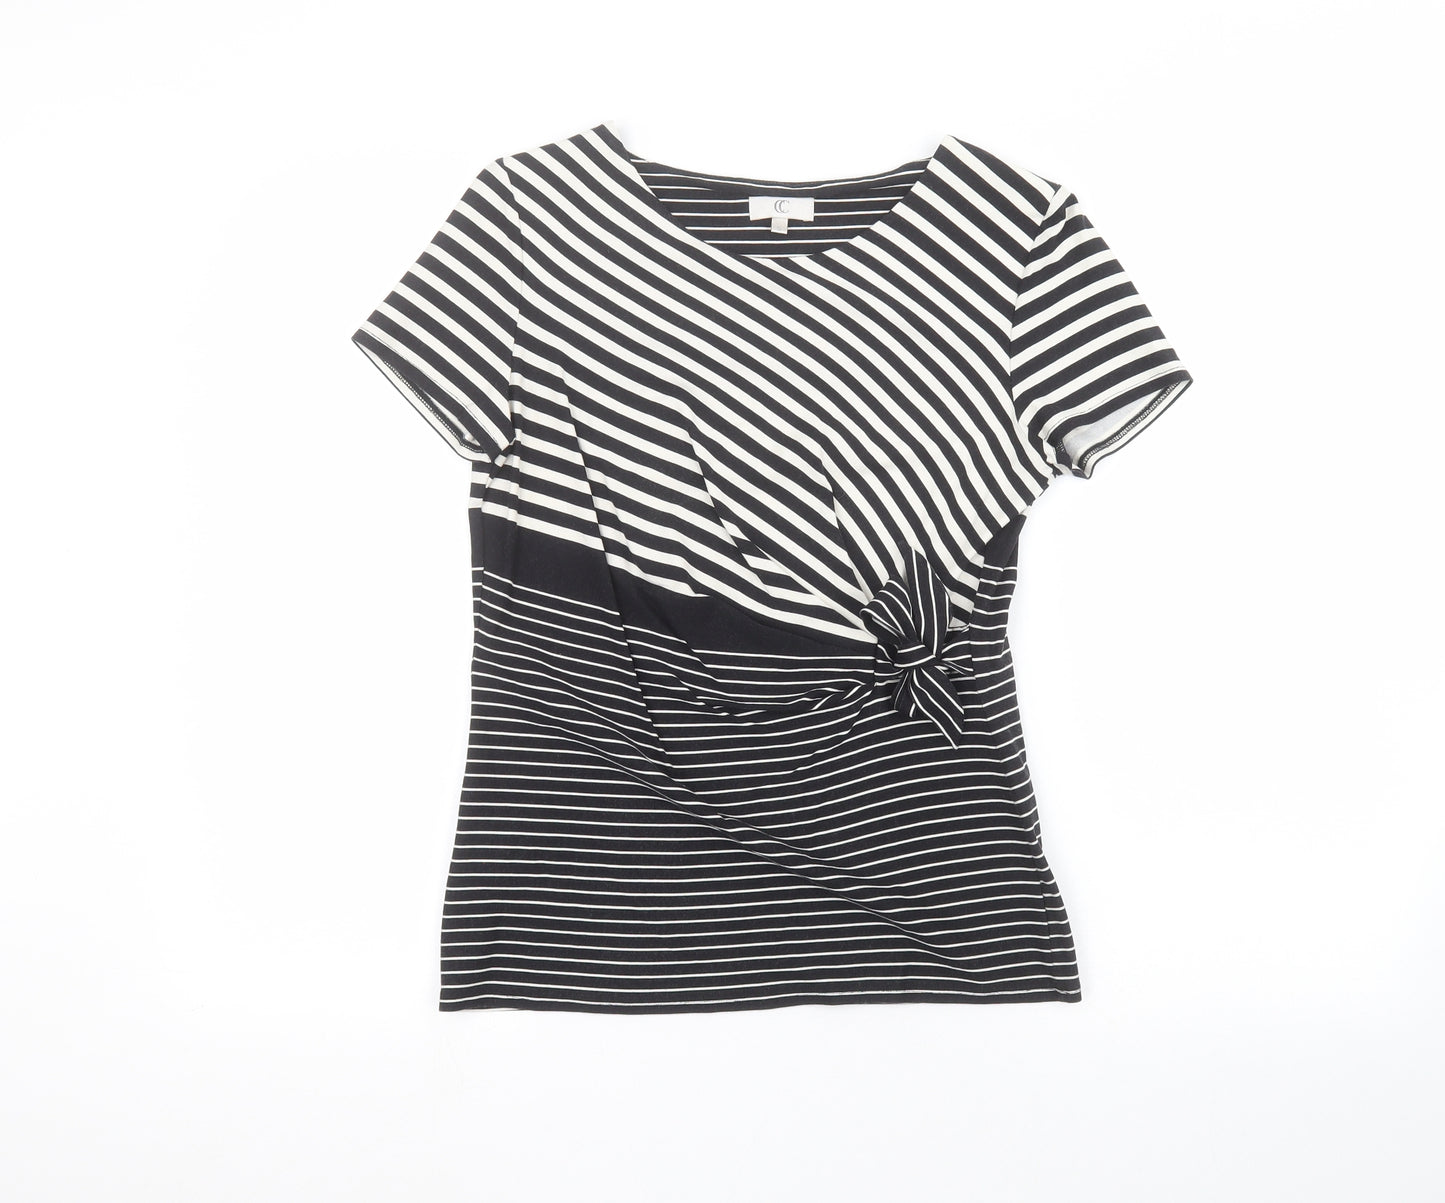 Country Club Womens Black Striped  Basic T-Shirt Size S